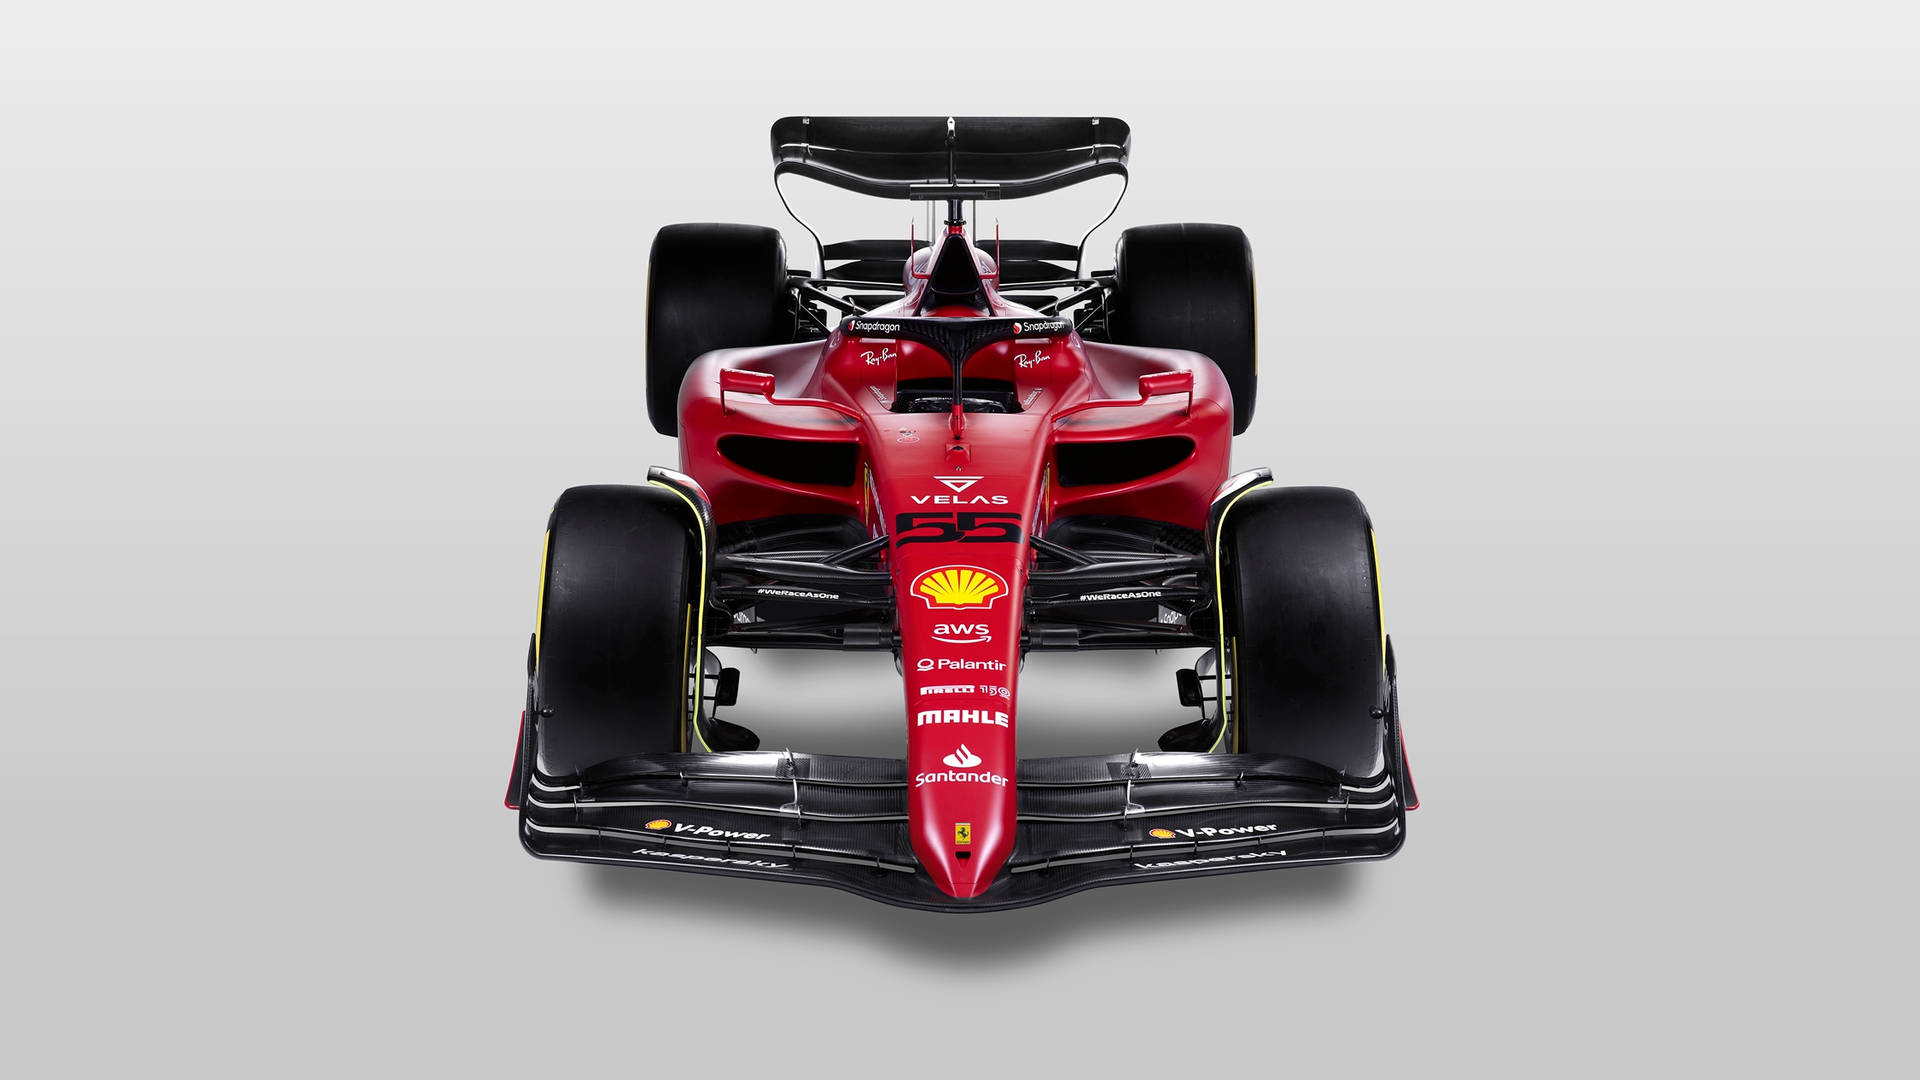 Ferrari F1 Car In Red On A White Background Wallpaper